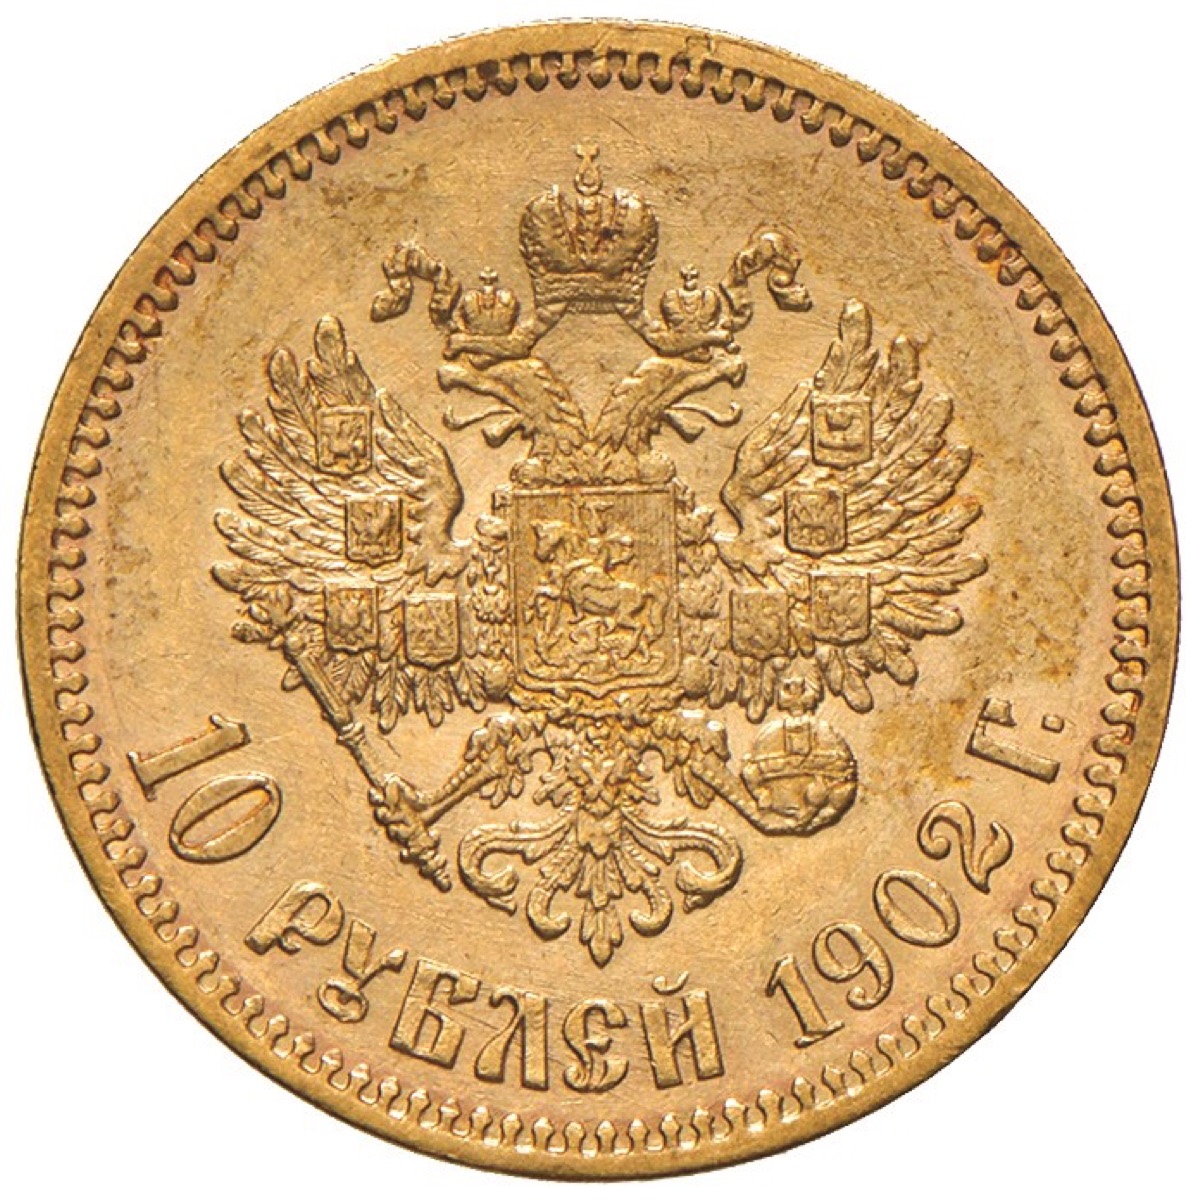 RUSSIA. Nicola II (1894-1917) - 10 rubli 1902. Friedb. 179. ORO, gr.8,60. BB/SPL - - Image 2 of 2